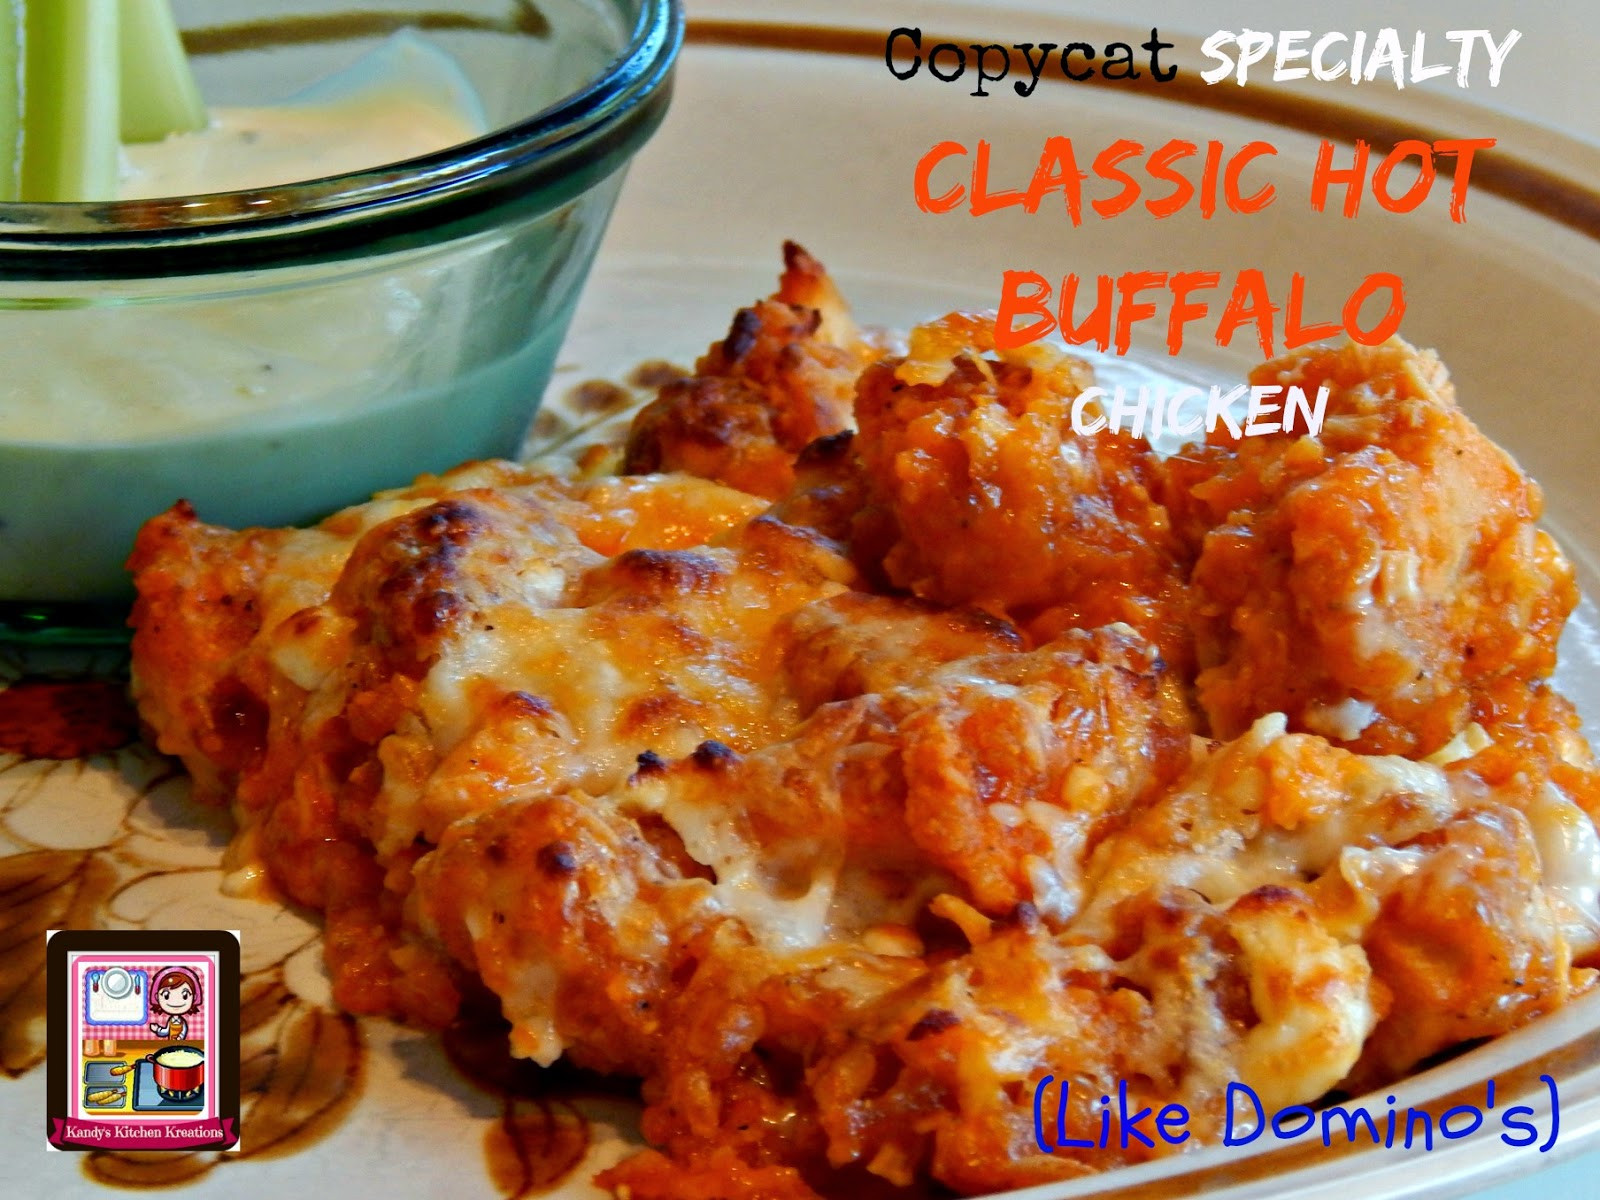 Buffalo Chicken Pizza Dominos
 Kandy s Kitchen Kreations Copycat Specialty Classic Hot